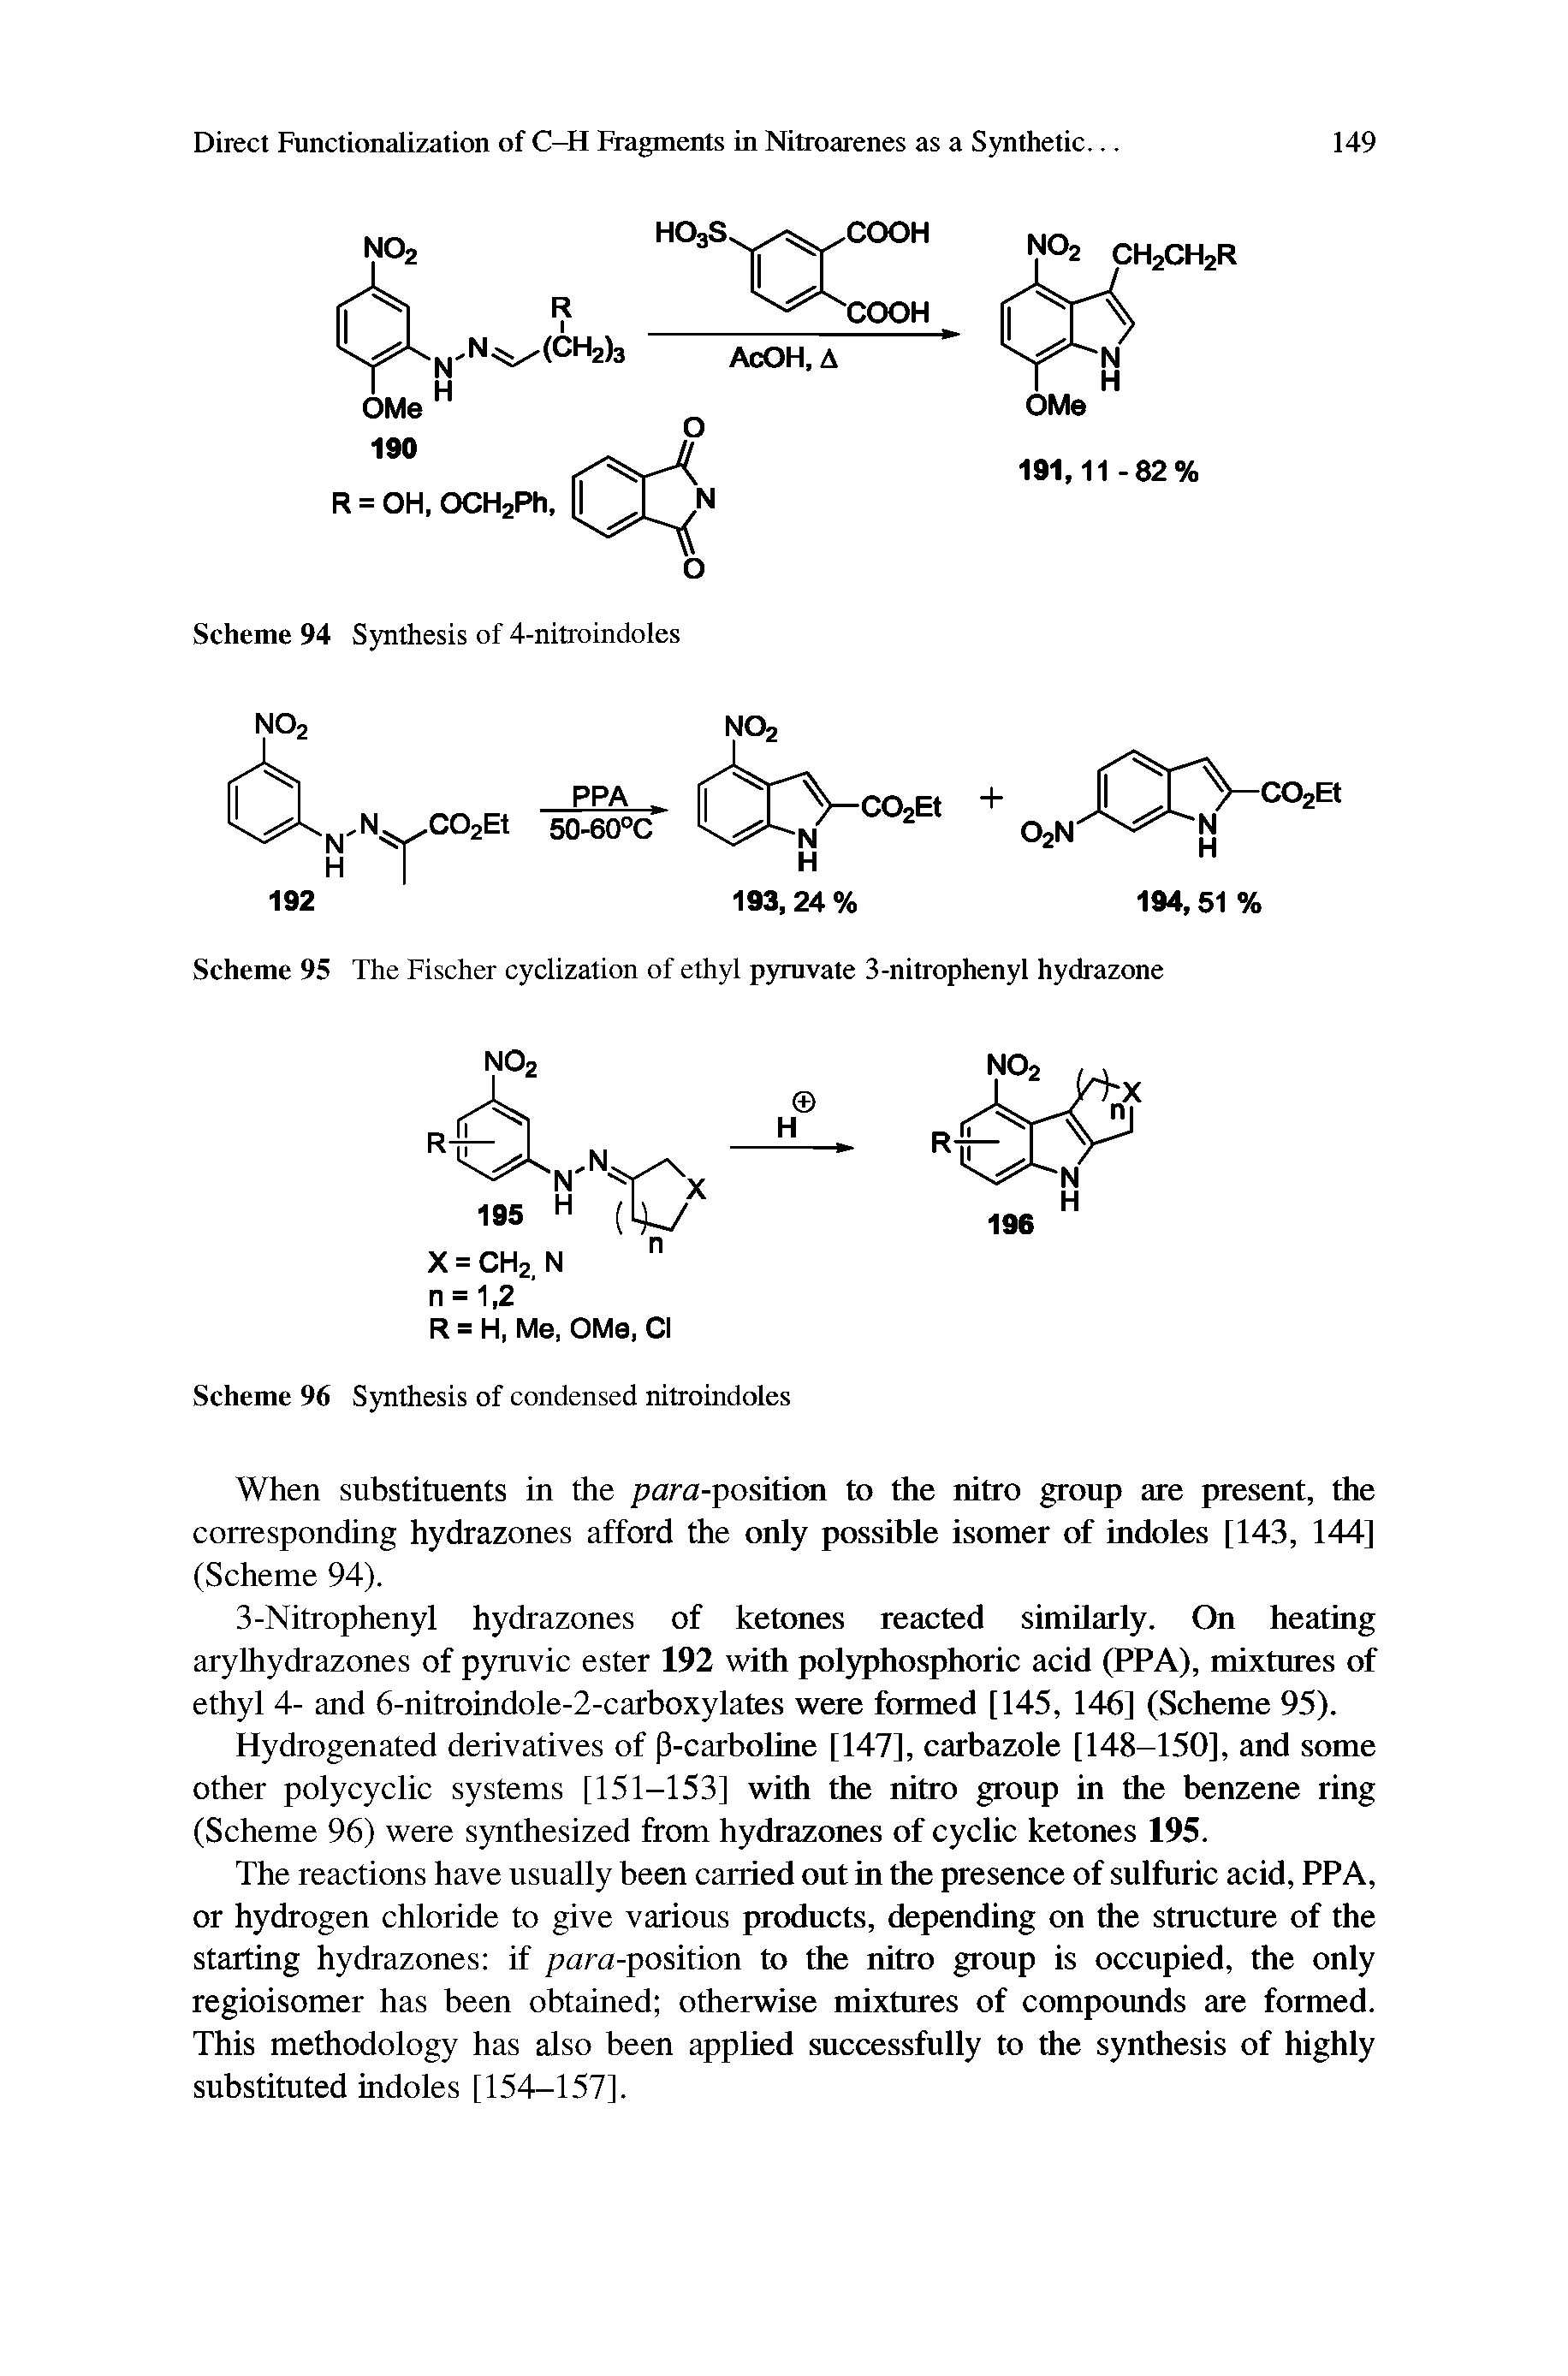 Scheme 95 The Fischer cyclization of ethyl pyruvate 3-nitrophenyl hydrazone...